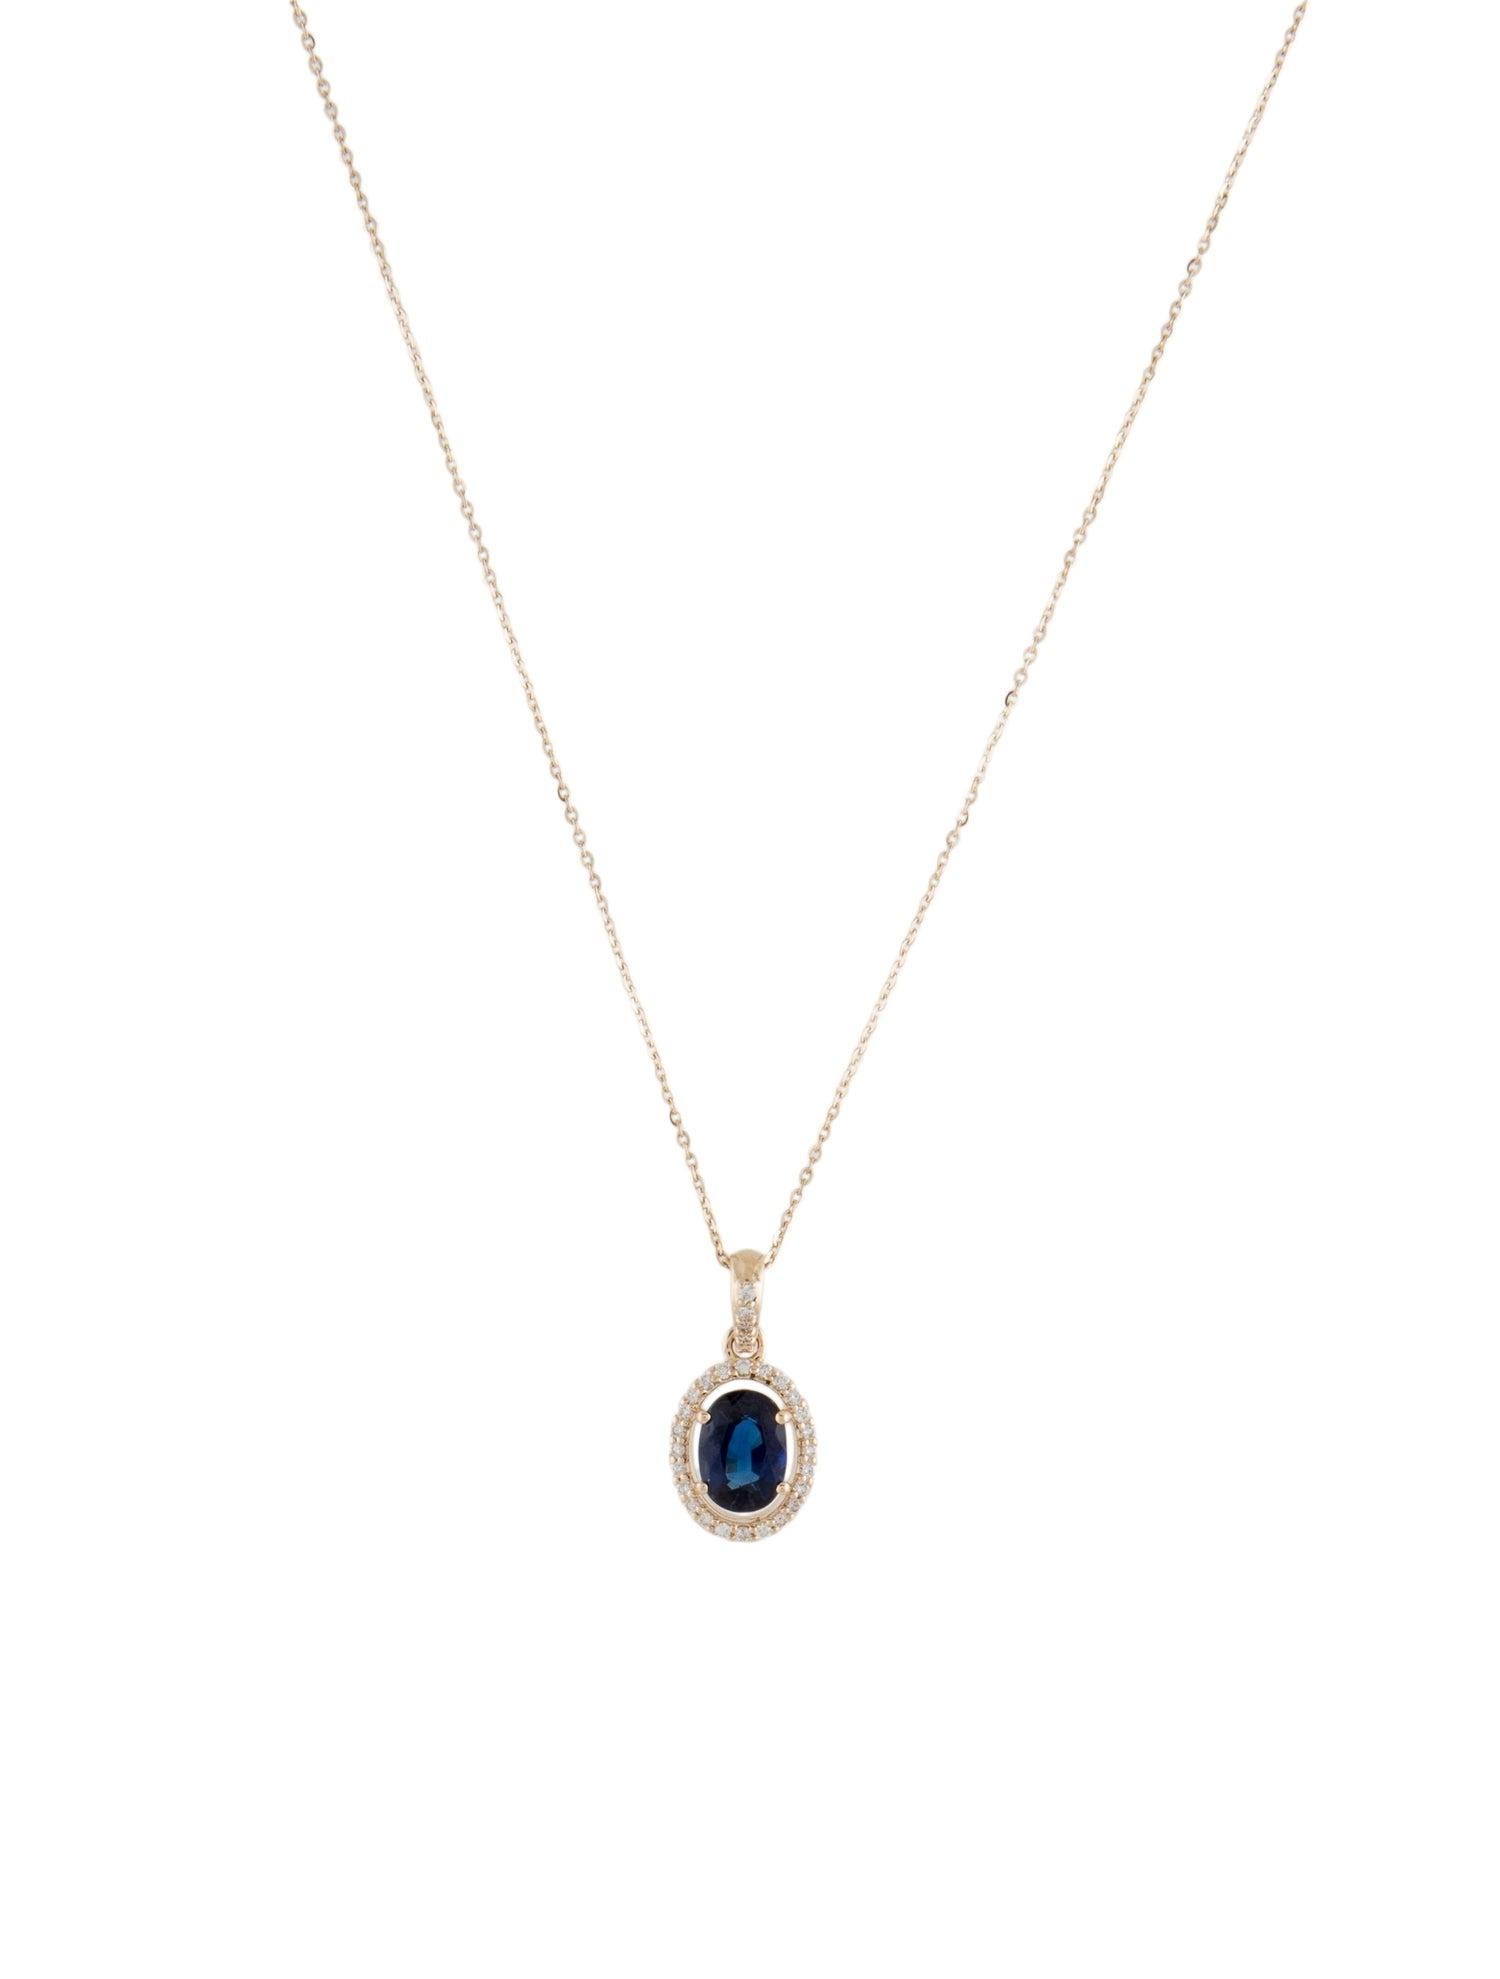 Women's 14K 1.26ct Sapphire & Diamond Pendant Necklace: Exquisite Luxury Statement Piece For Sale